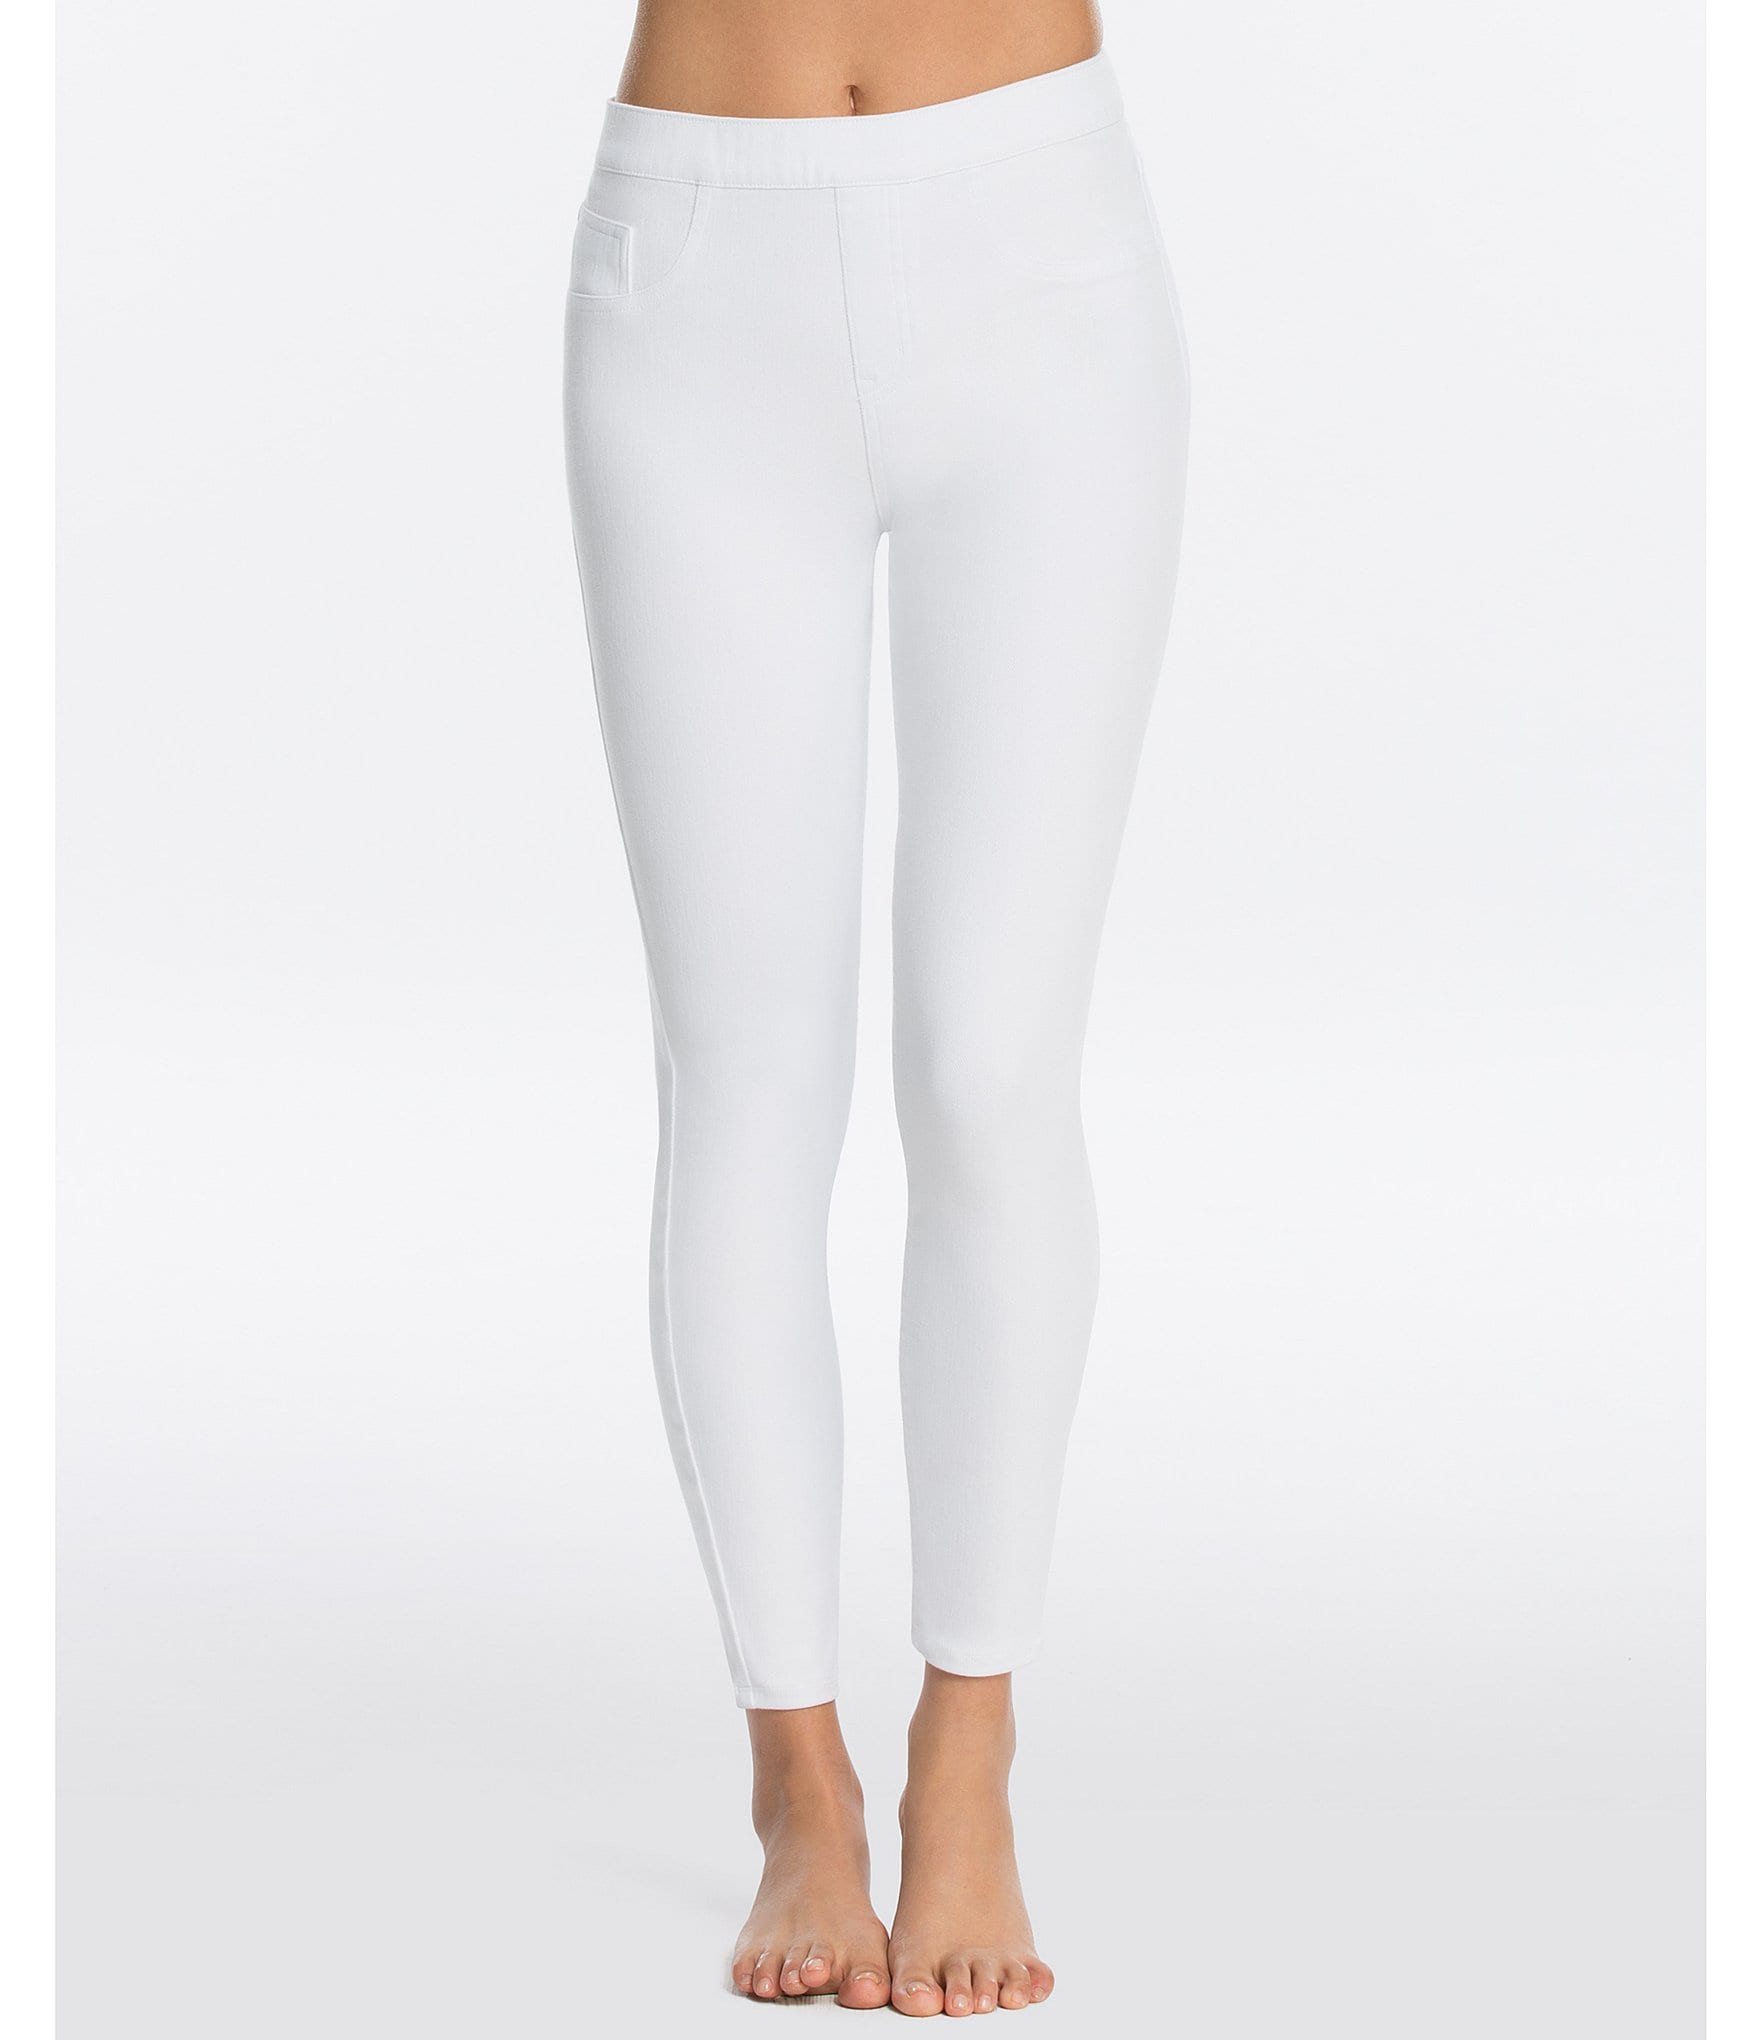 Spanx white shapewear top size medium. Top is very - Depop